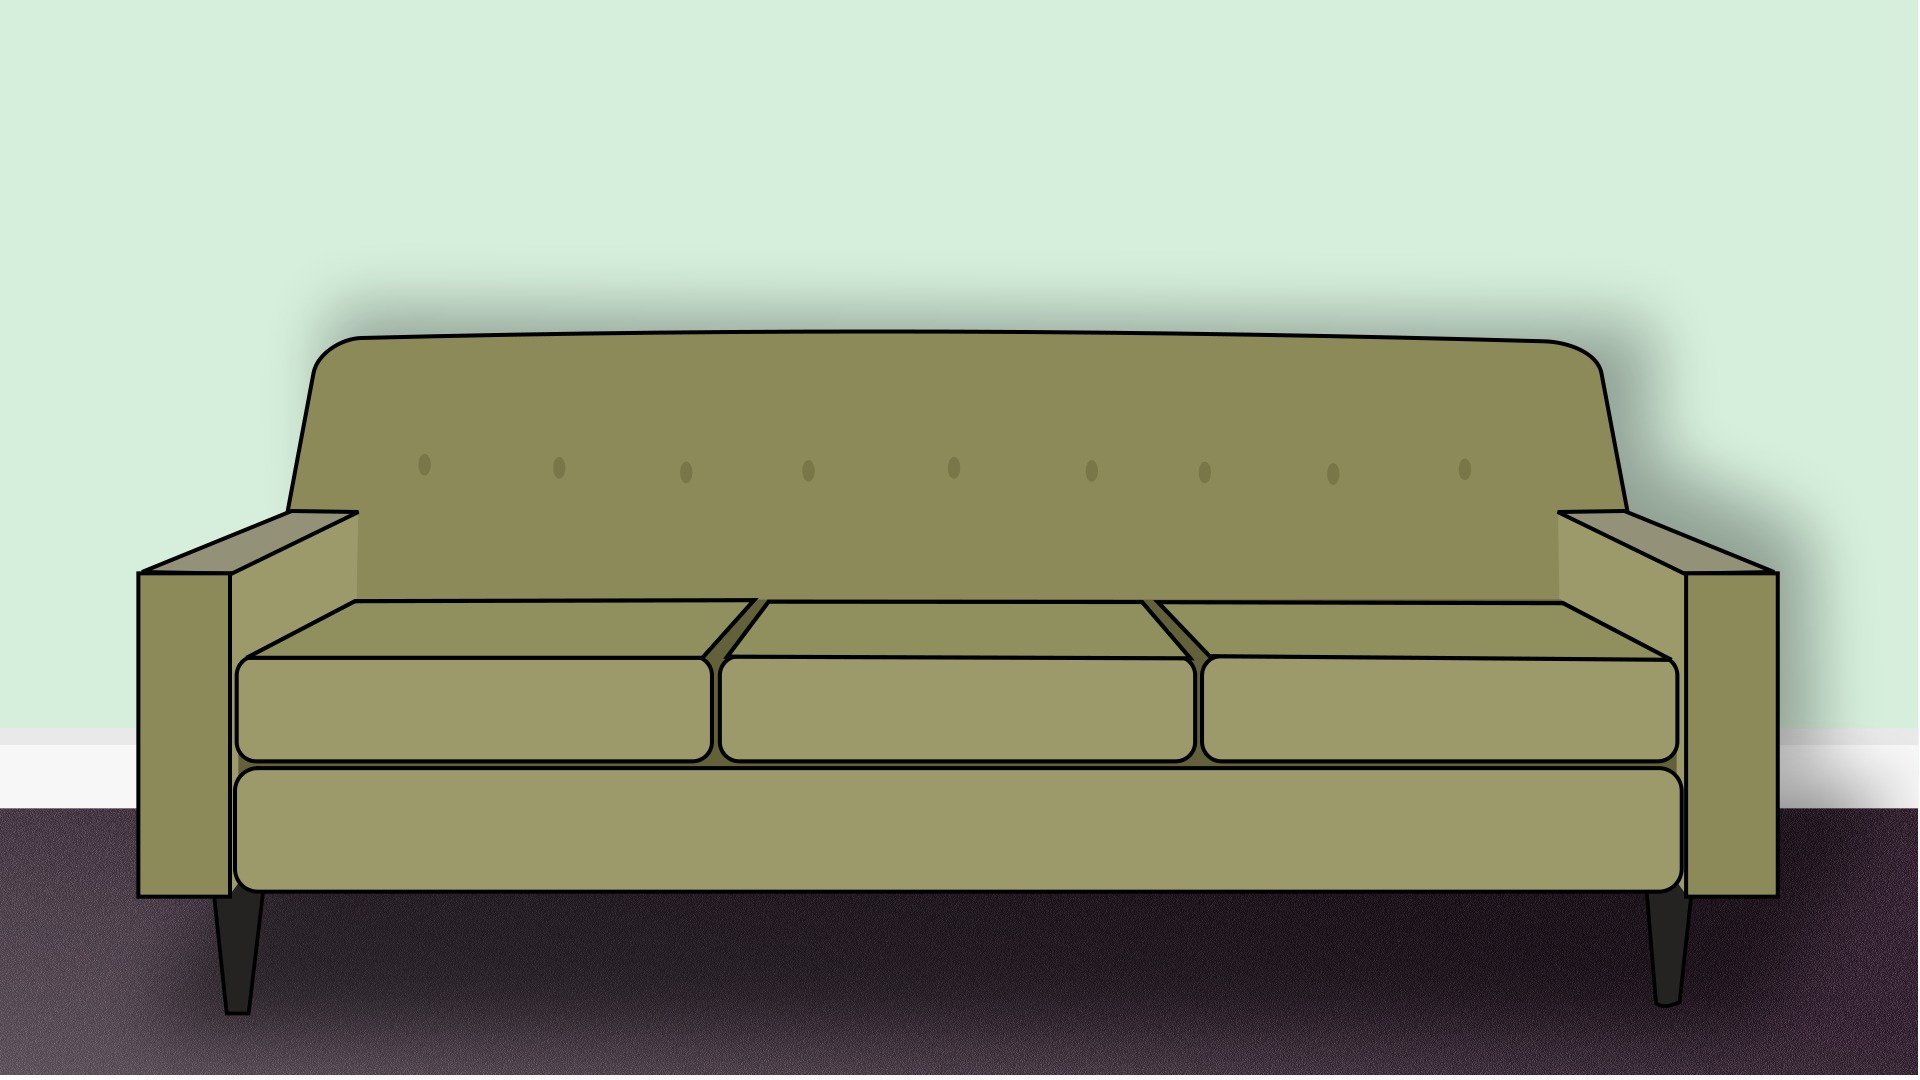 Нарисованный диван на белом фоне